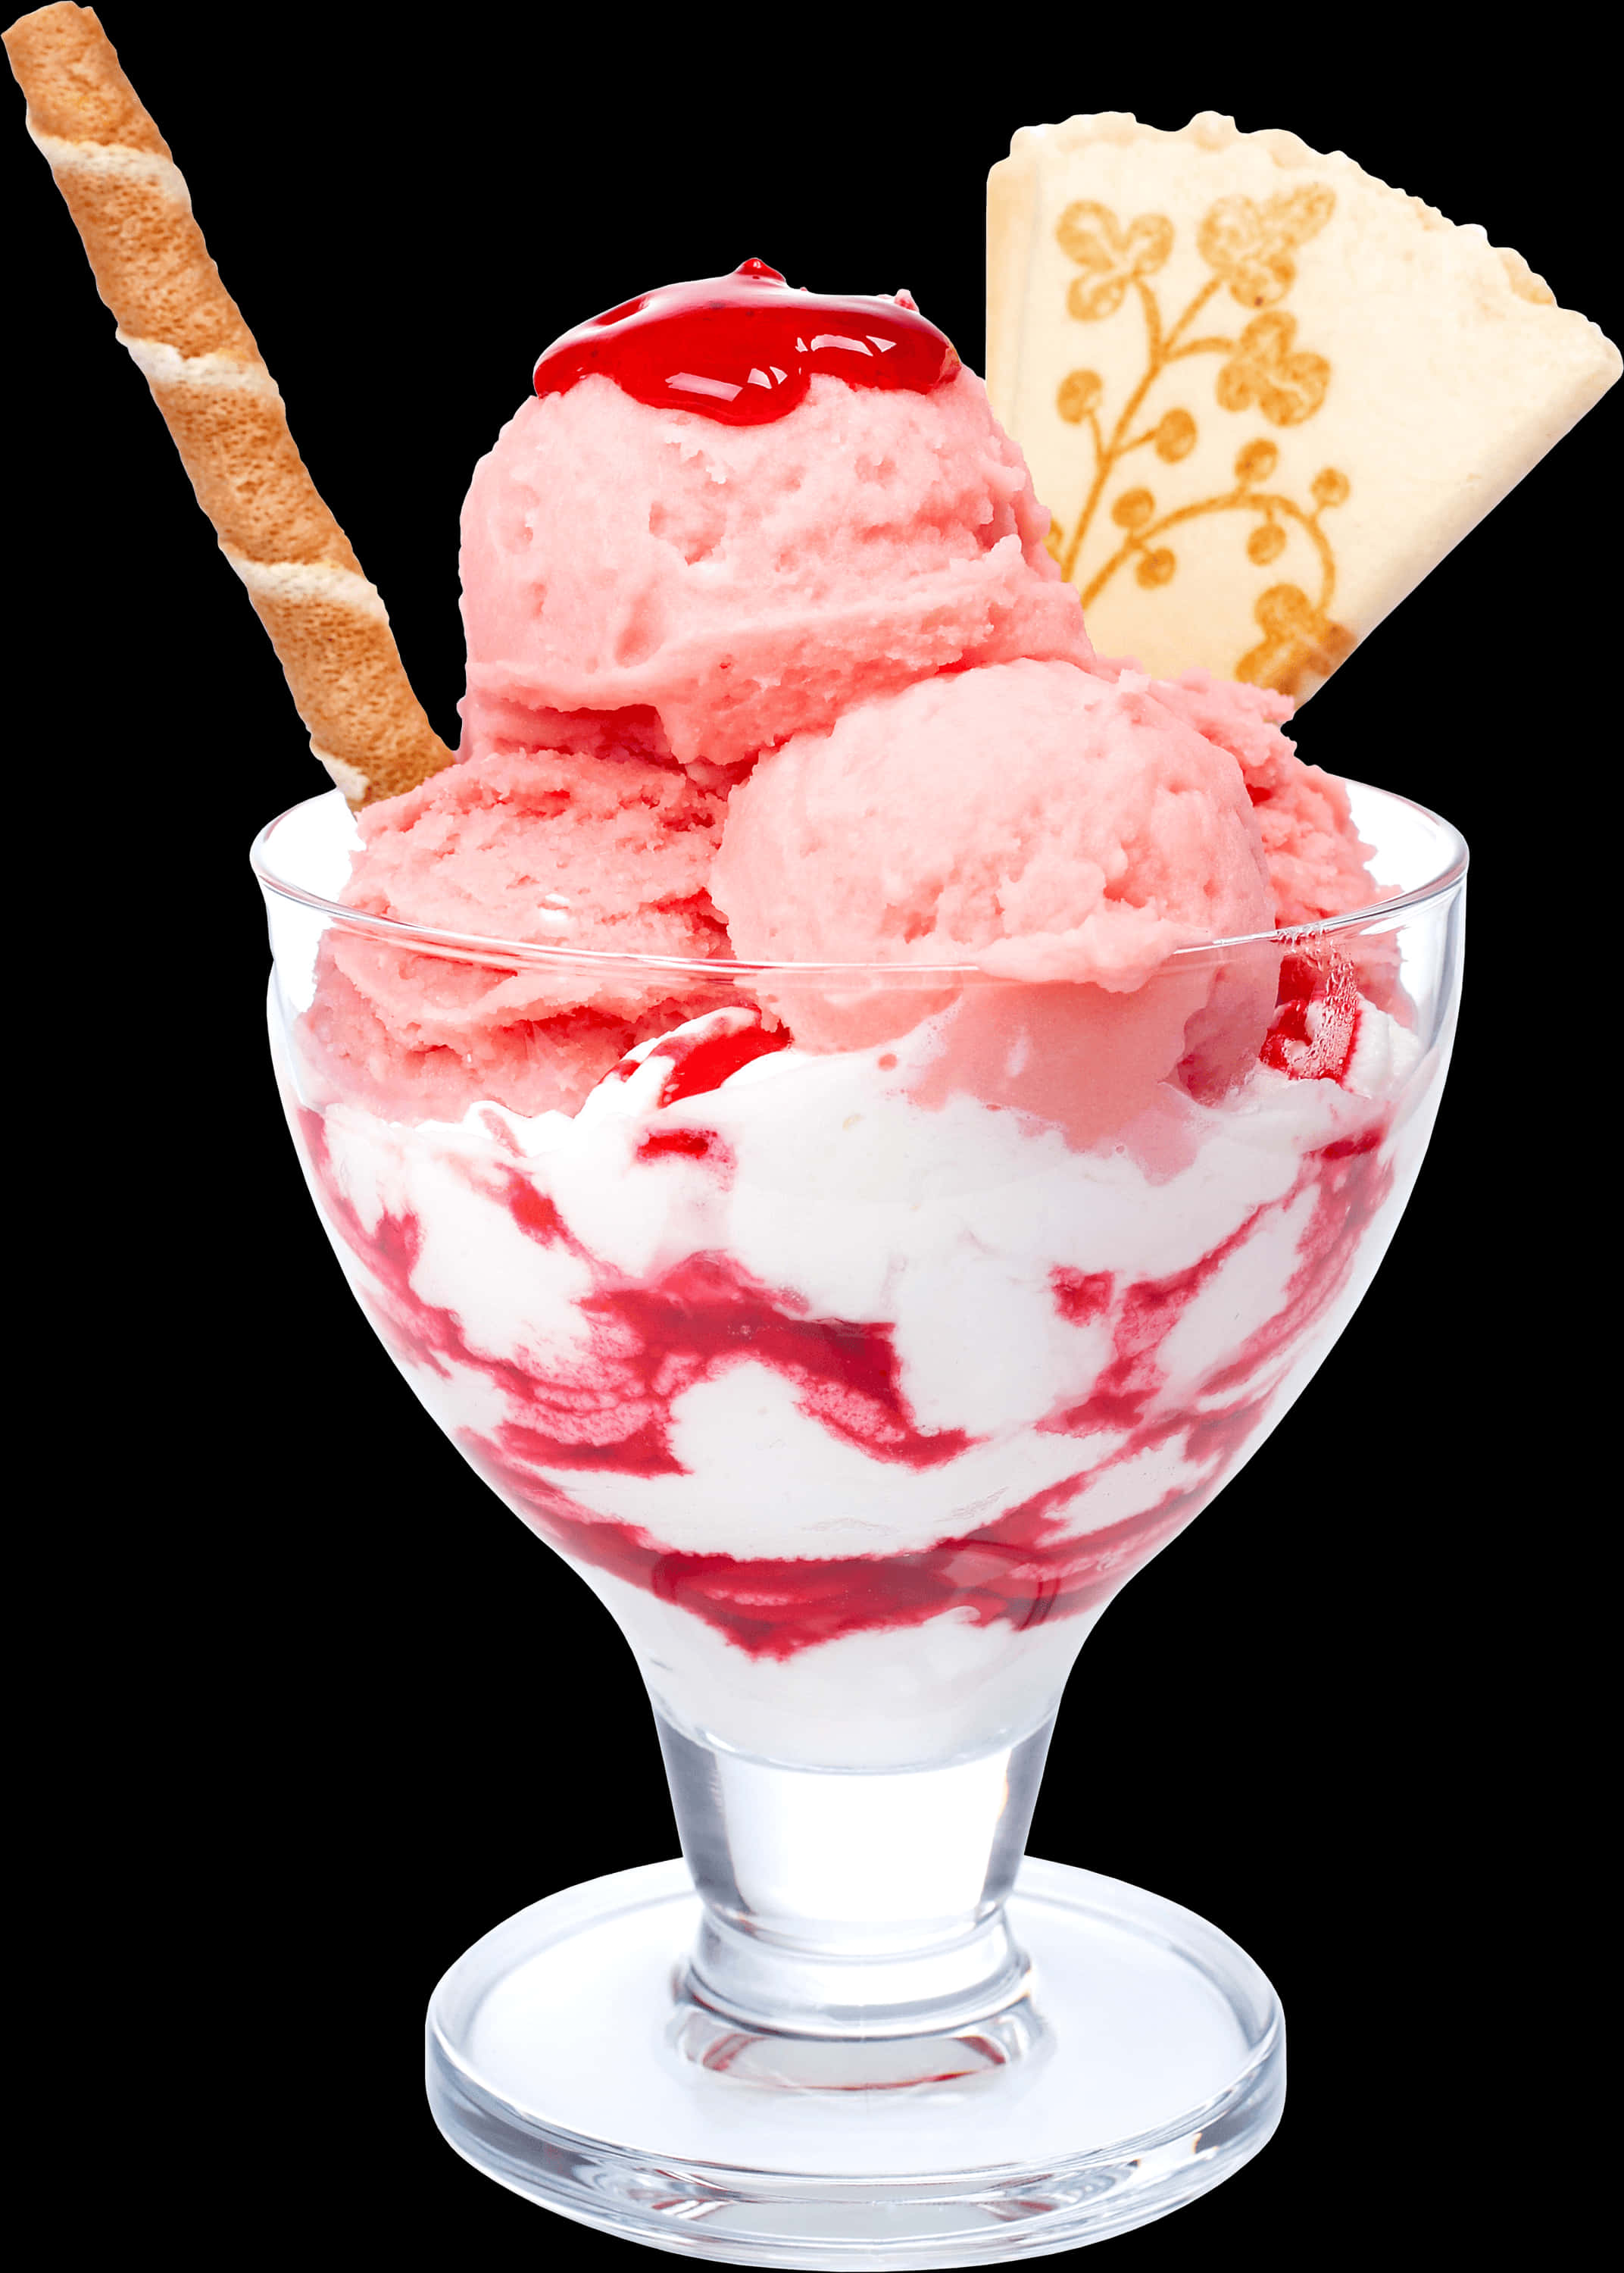 Strawberry Ice Cream Sundaewith Toppings